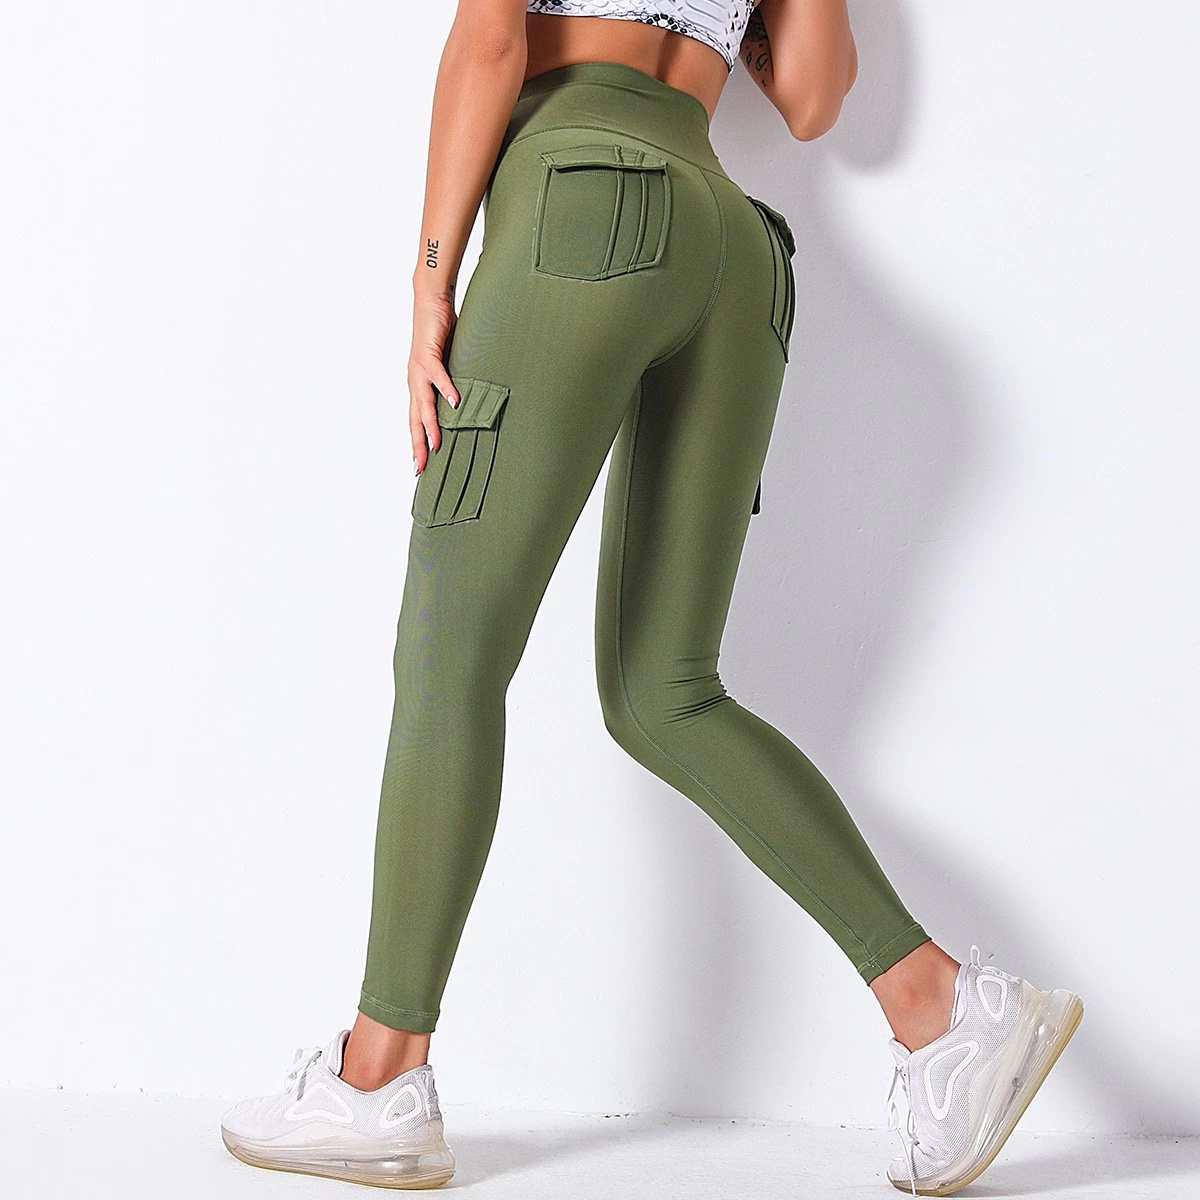 S-SHAPER Women's Seamless High Waist Yoga Pants with Pockets Cargo Yoga Pants Tummy Control Workout Yoga Leggings Factory